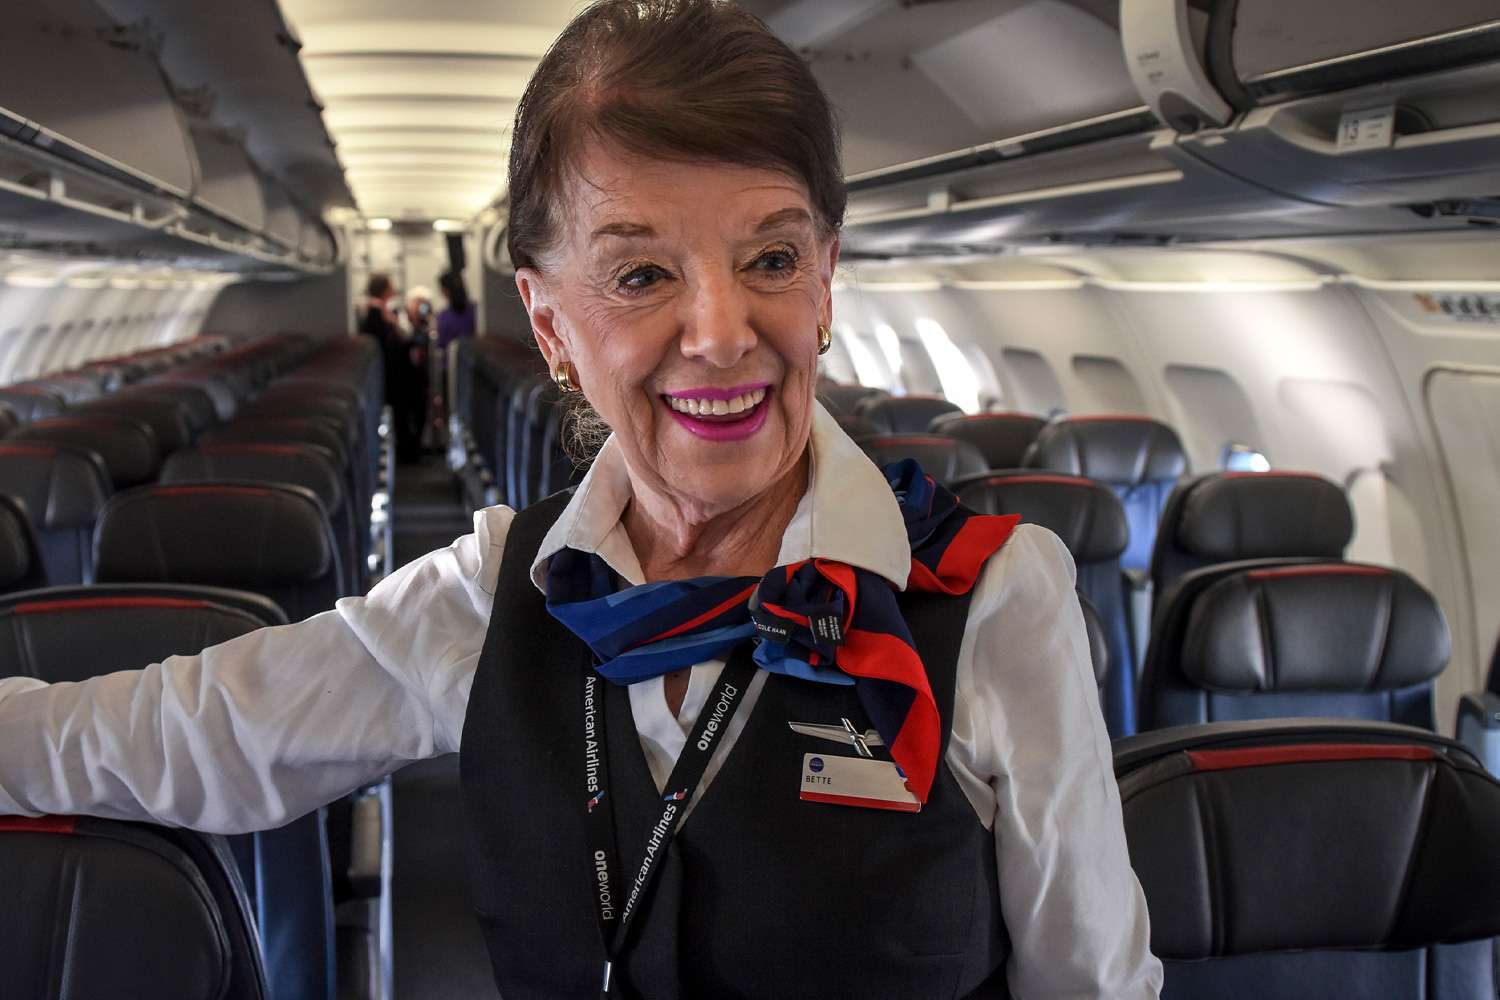 Bette Nash, World's Longest-Serving Flight Attendant, Dead at 88: 'Fly High'